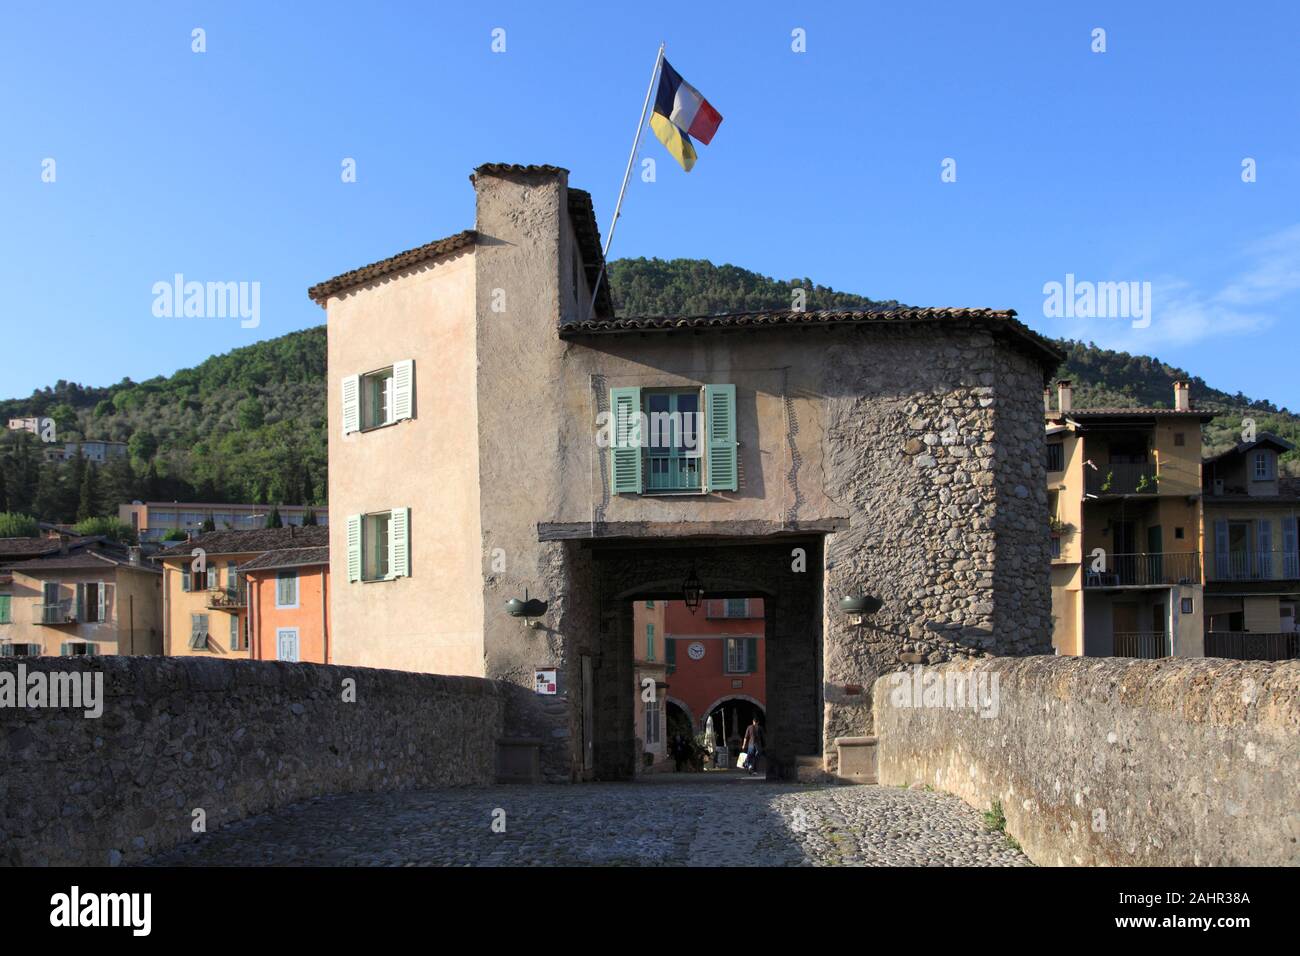 The Village of Sospel, Old Town, Toll Bridge, Roya Valley, Alpes-Maritimes, Cote d'Azur, Provence, France, Europe Stock Photo